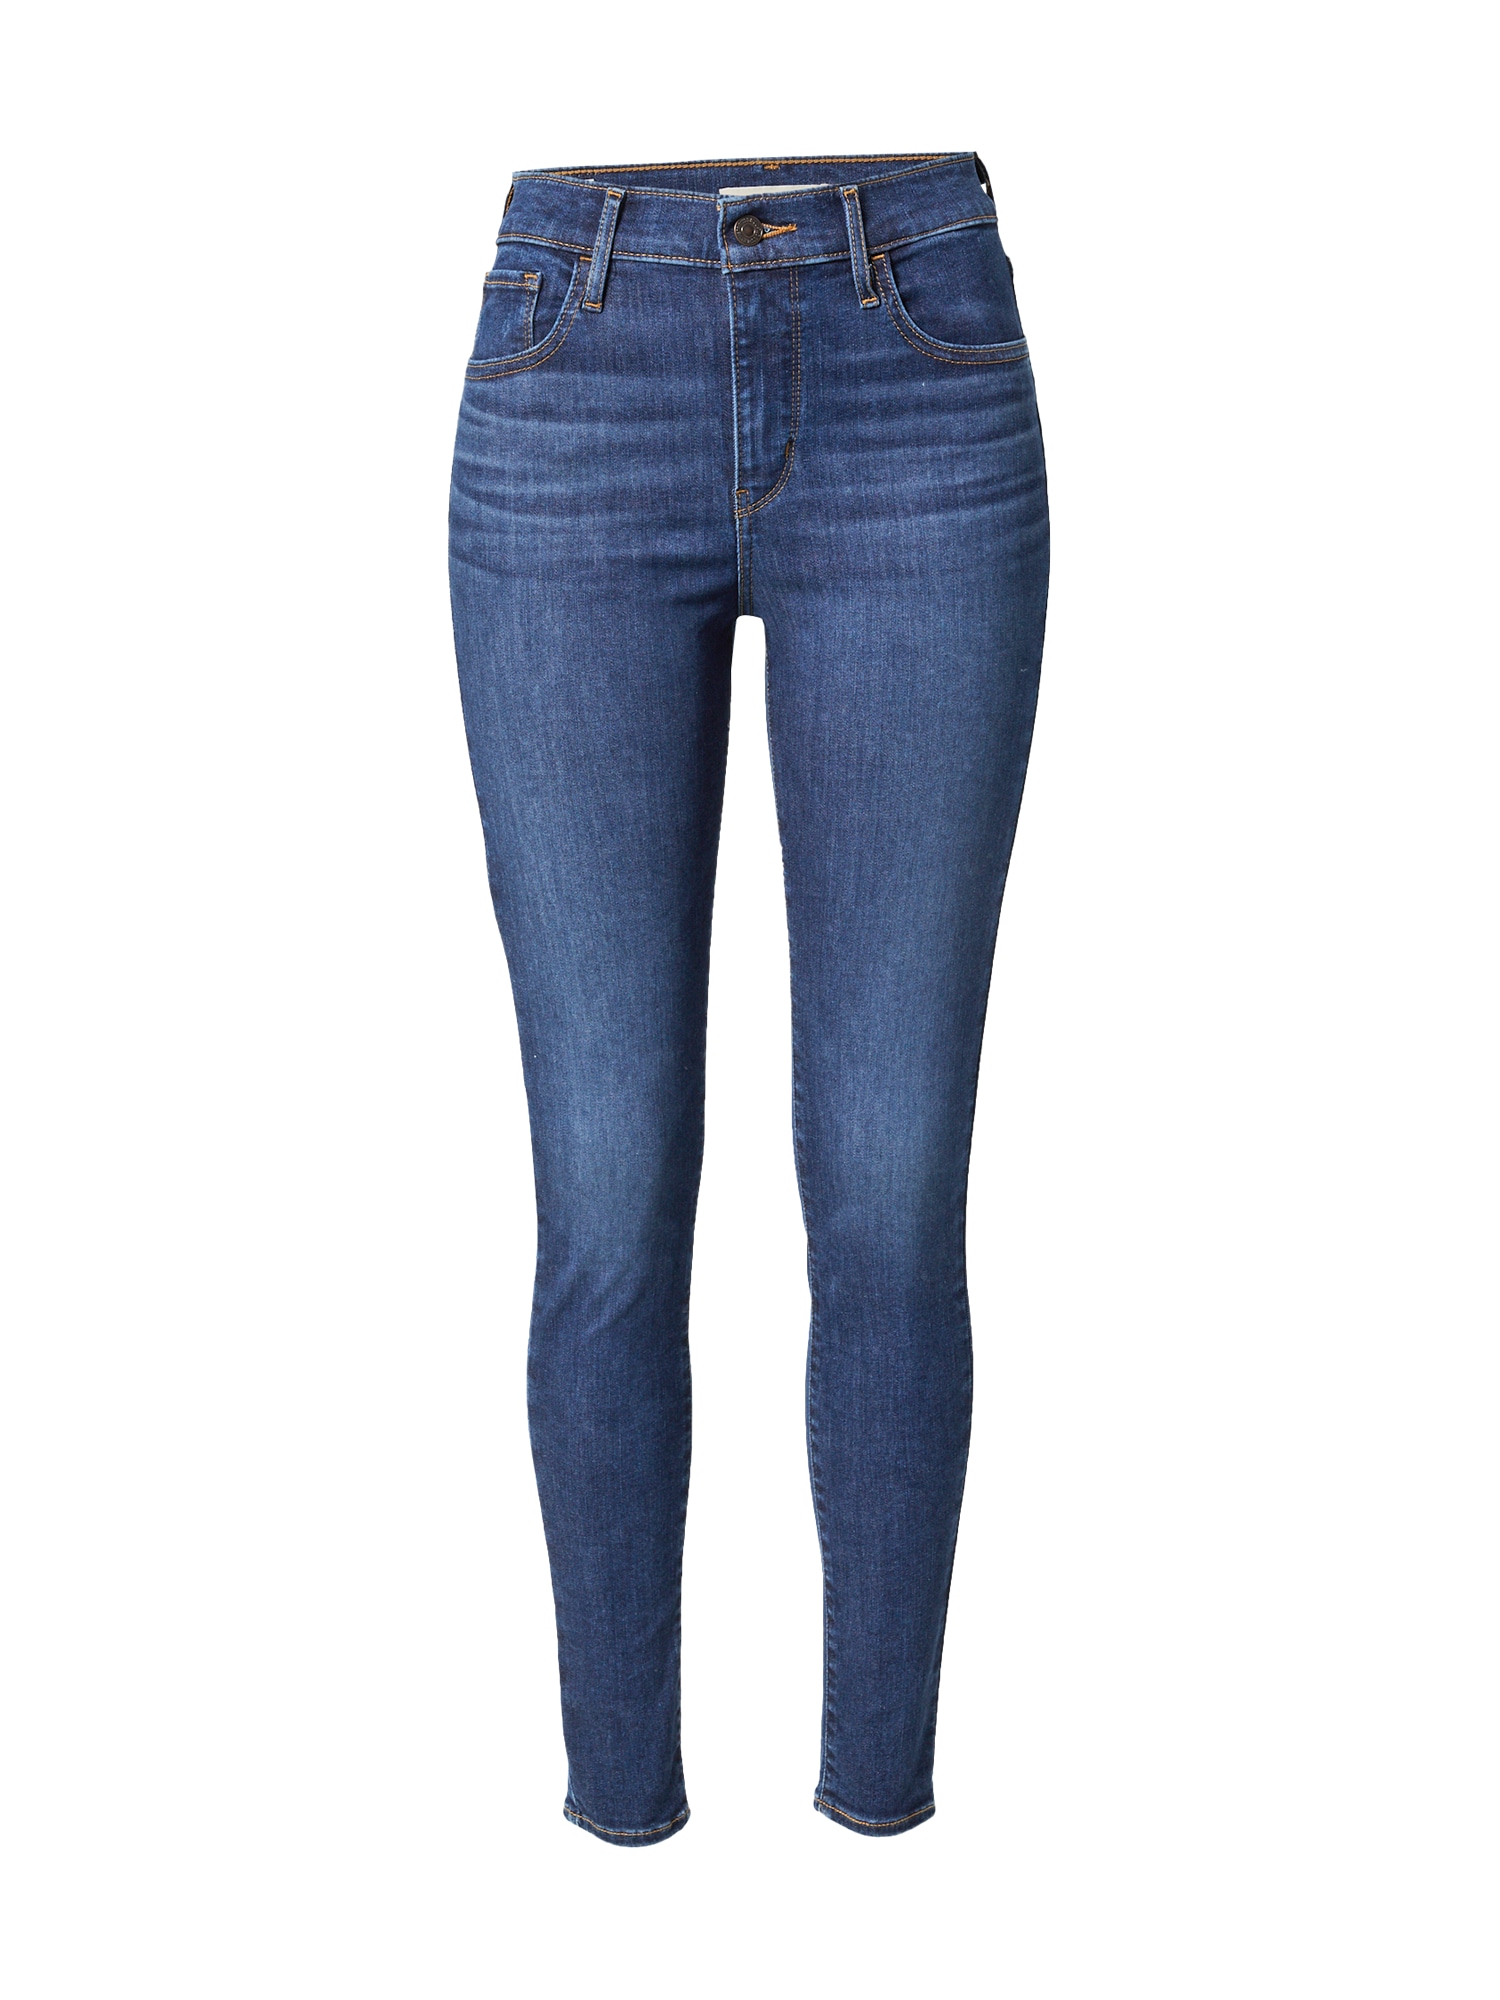 Jeans '720 HIRISE SUPER SKINNY' von Levis